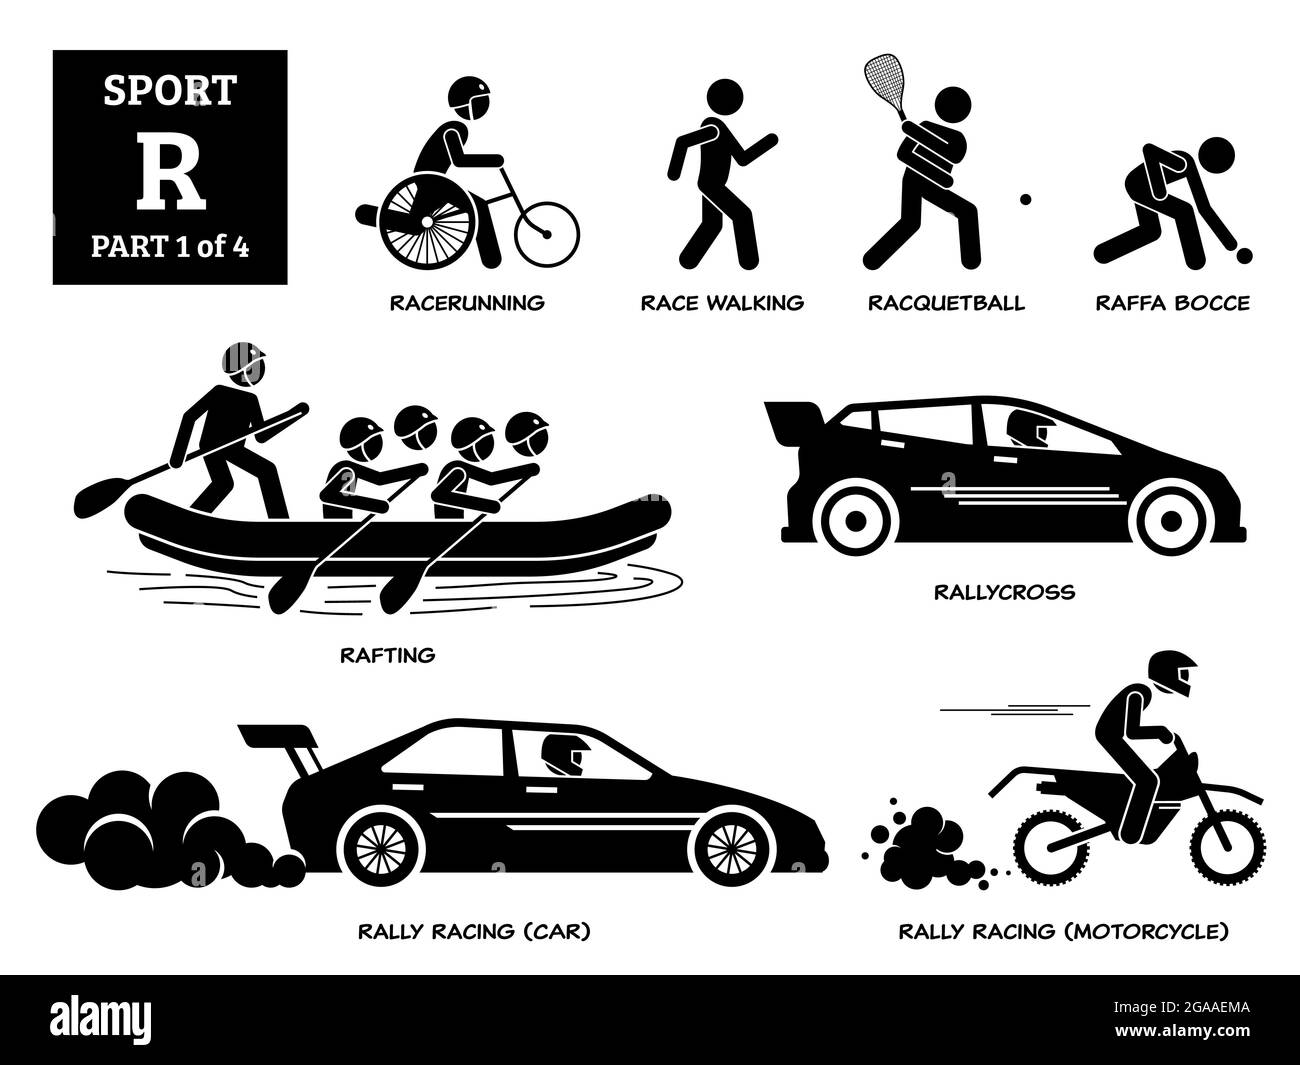 Sport games alphabet R vector icons pictogram. Racerunning, race walking, racquetball, raffa bocce, rafting, rallycross, rally racing car, and rally r Stock Vector